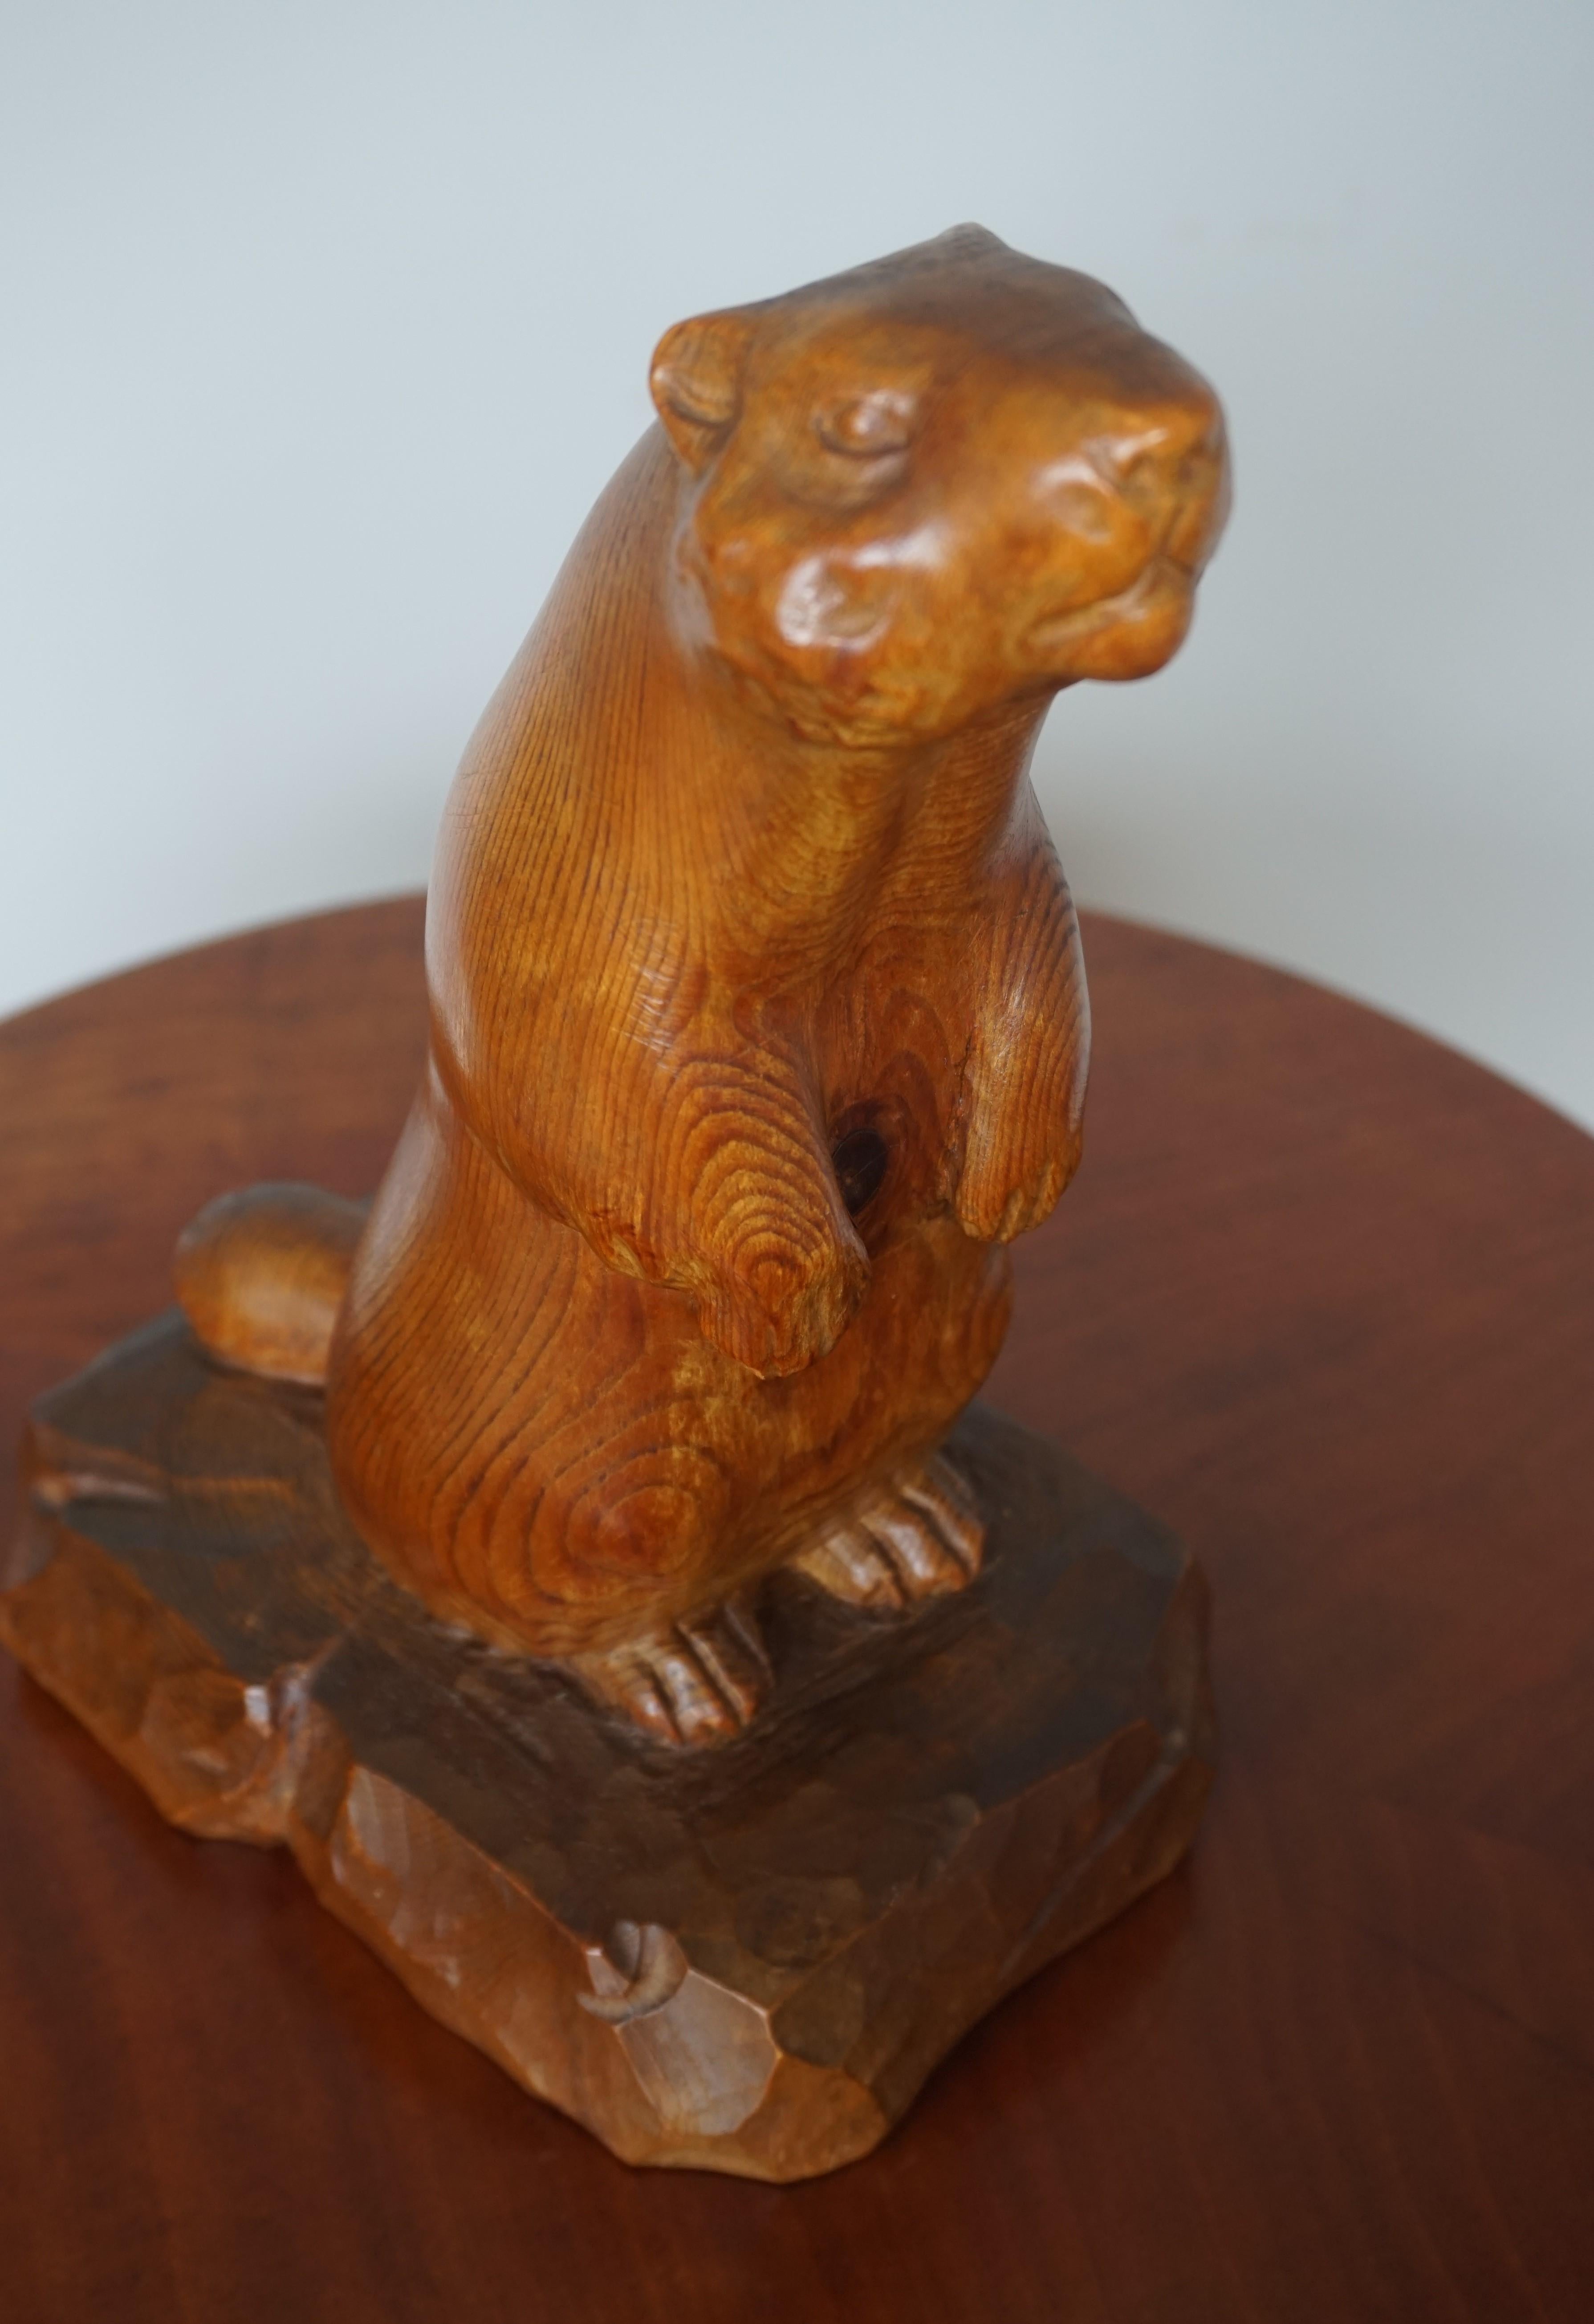 groundhog statue